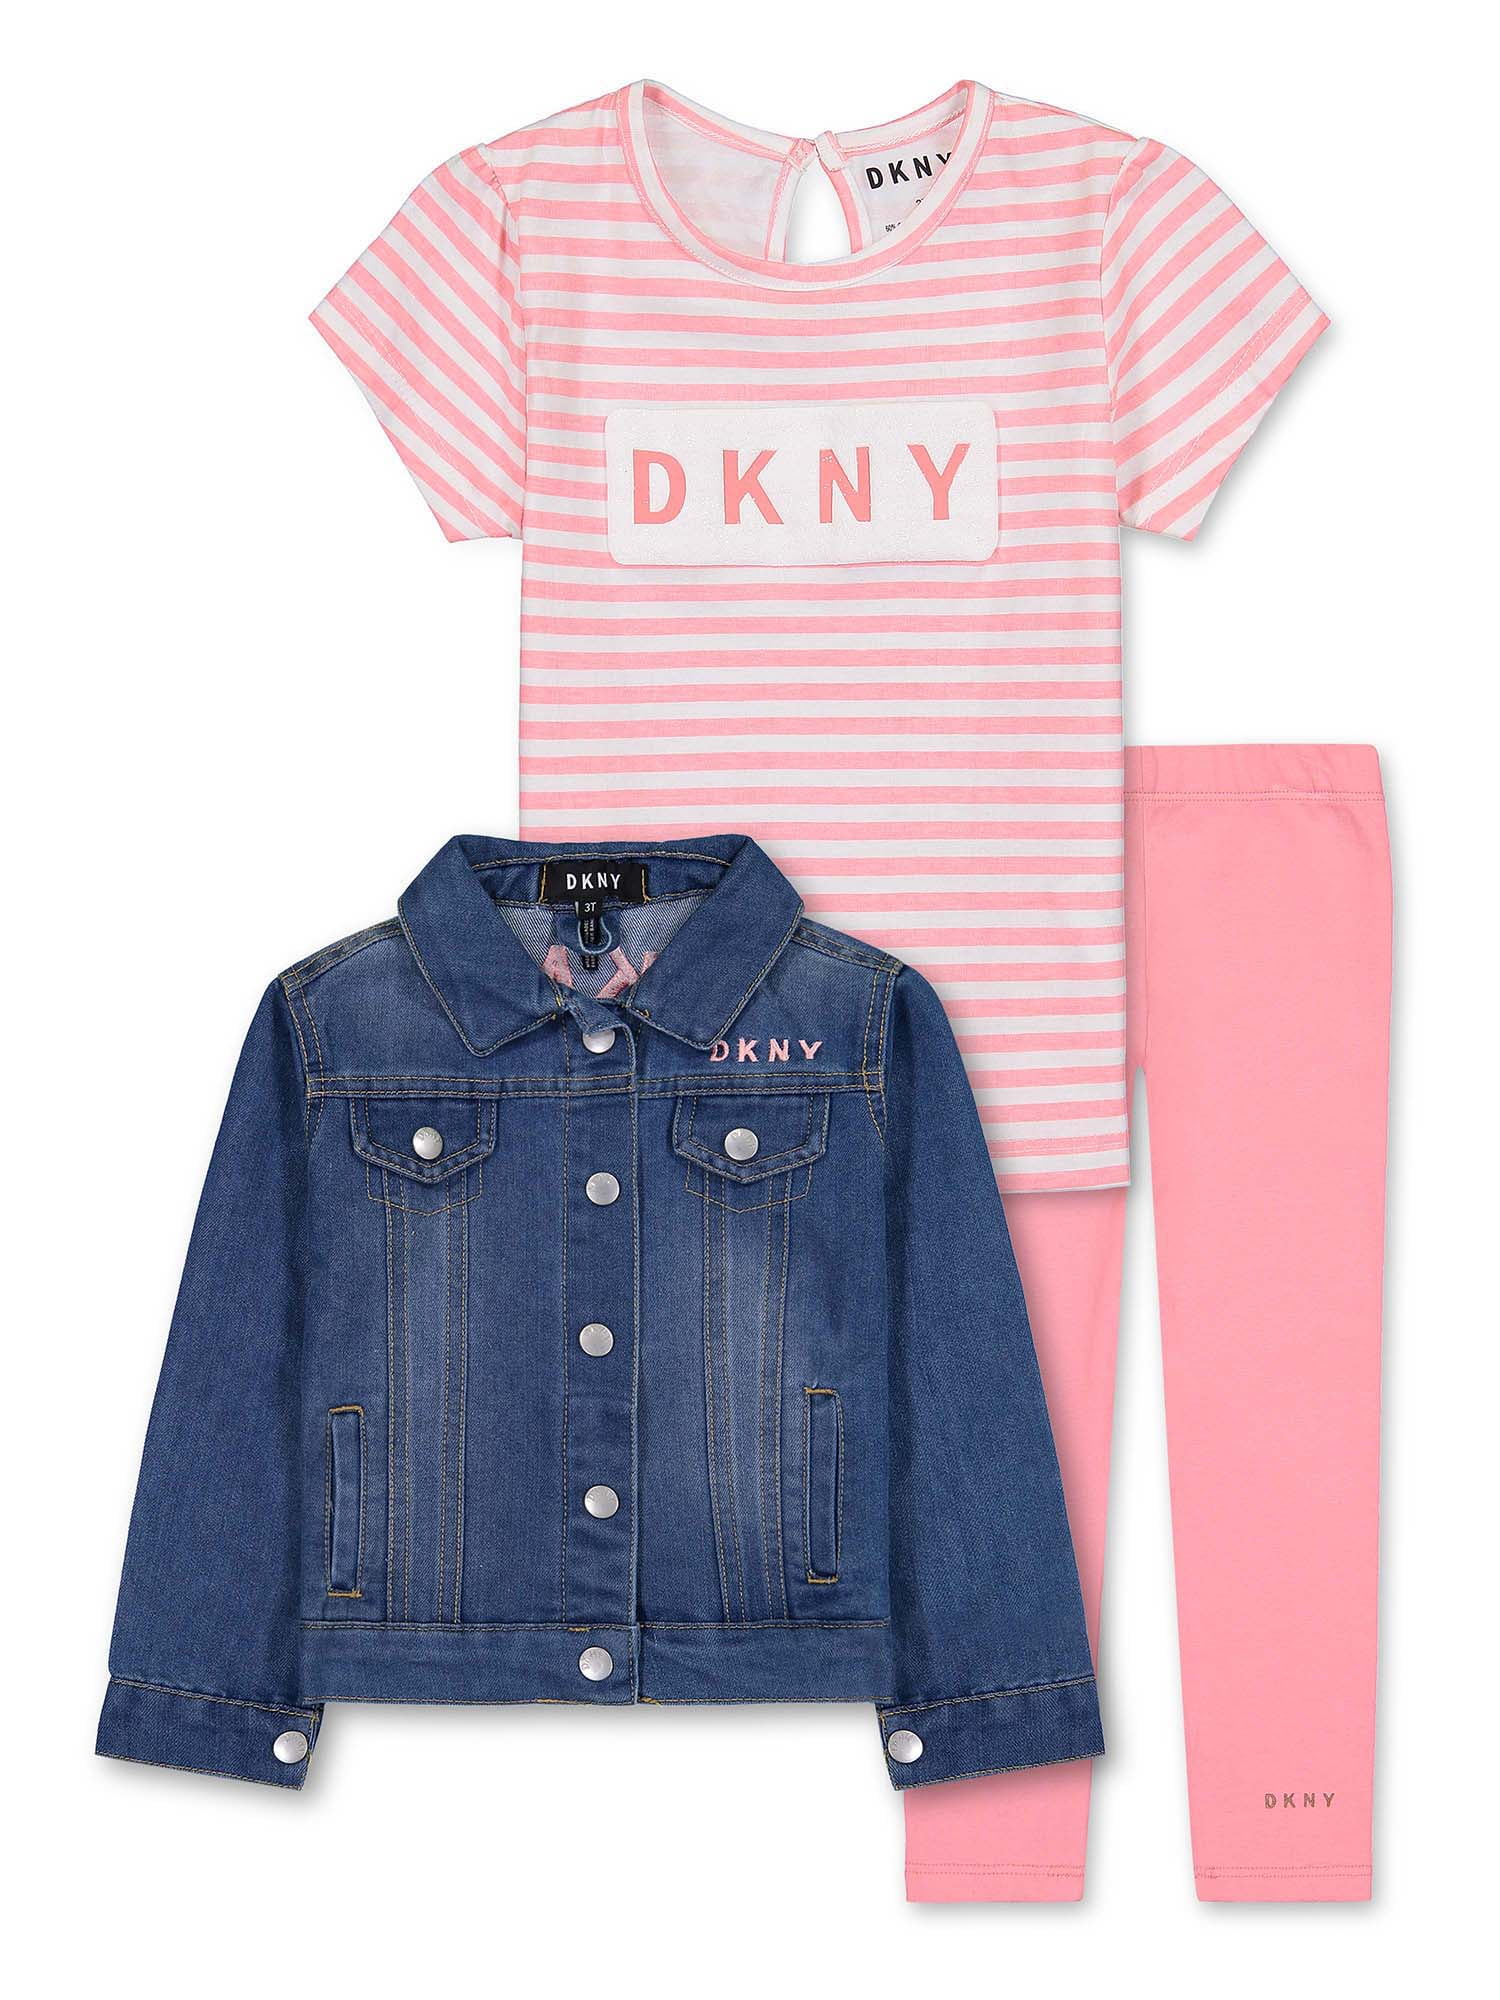 dkny baby clothes